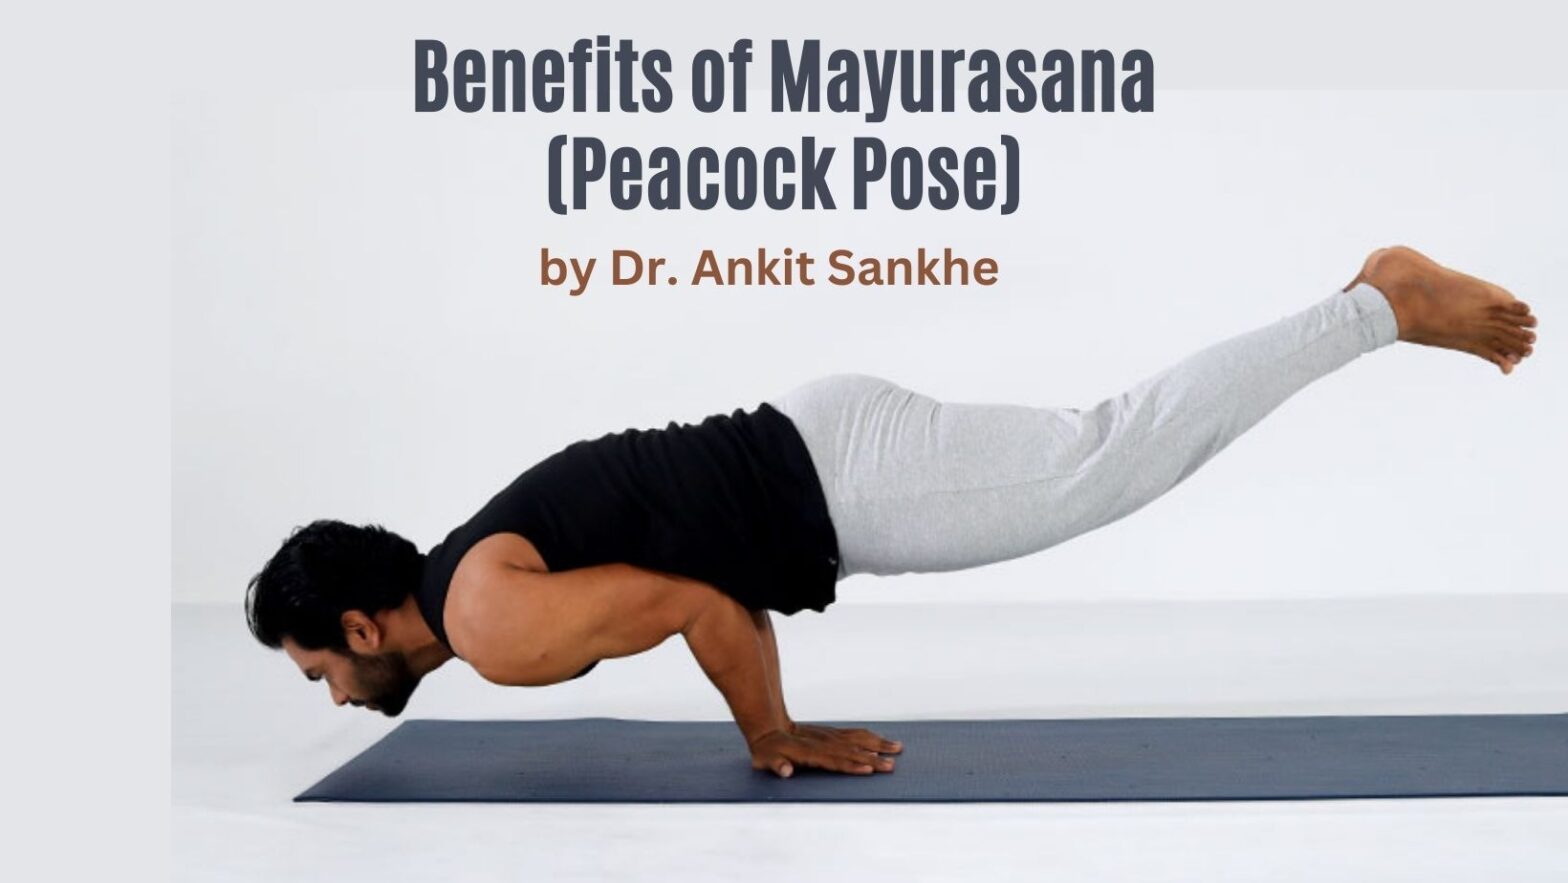 Yoga Instructor Doing Mayurasana Variation Pose Peacock Pose Stock Photo -  Download Image Now - iStock